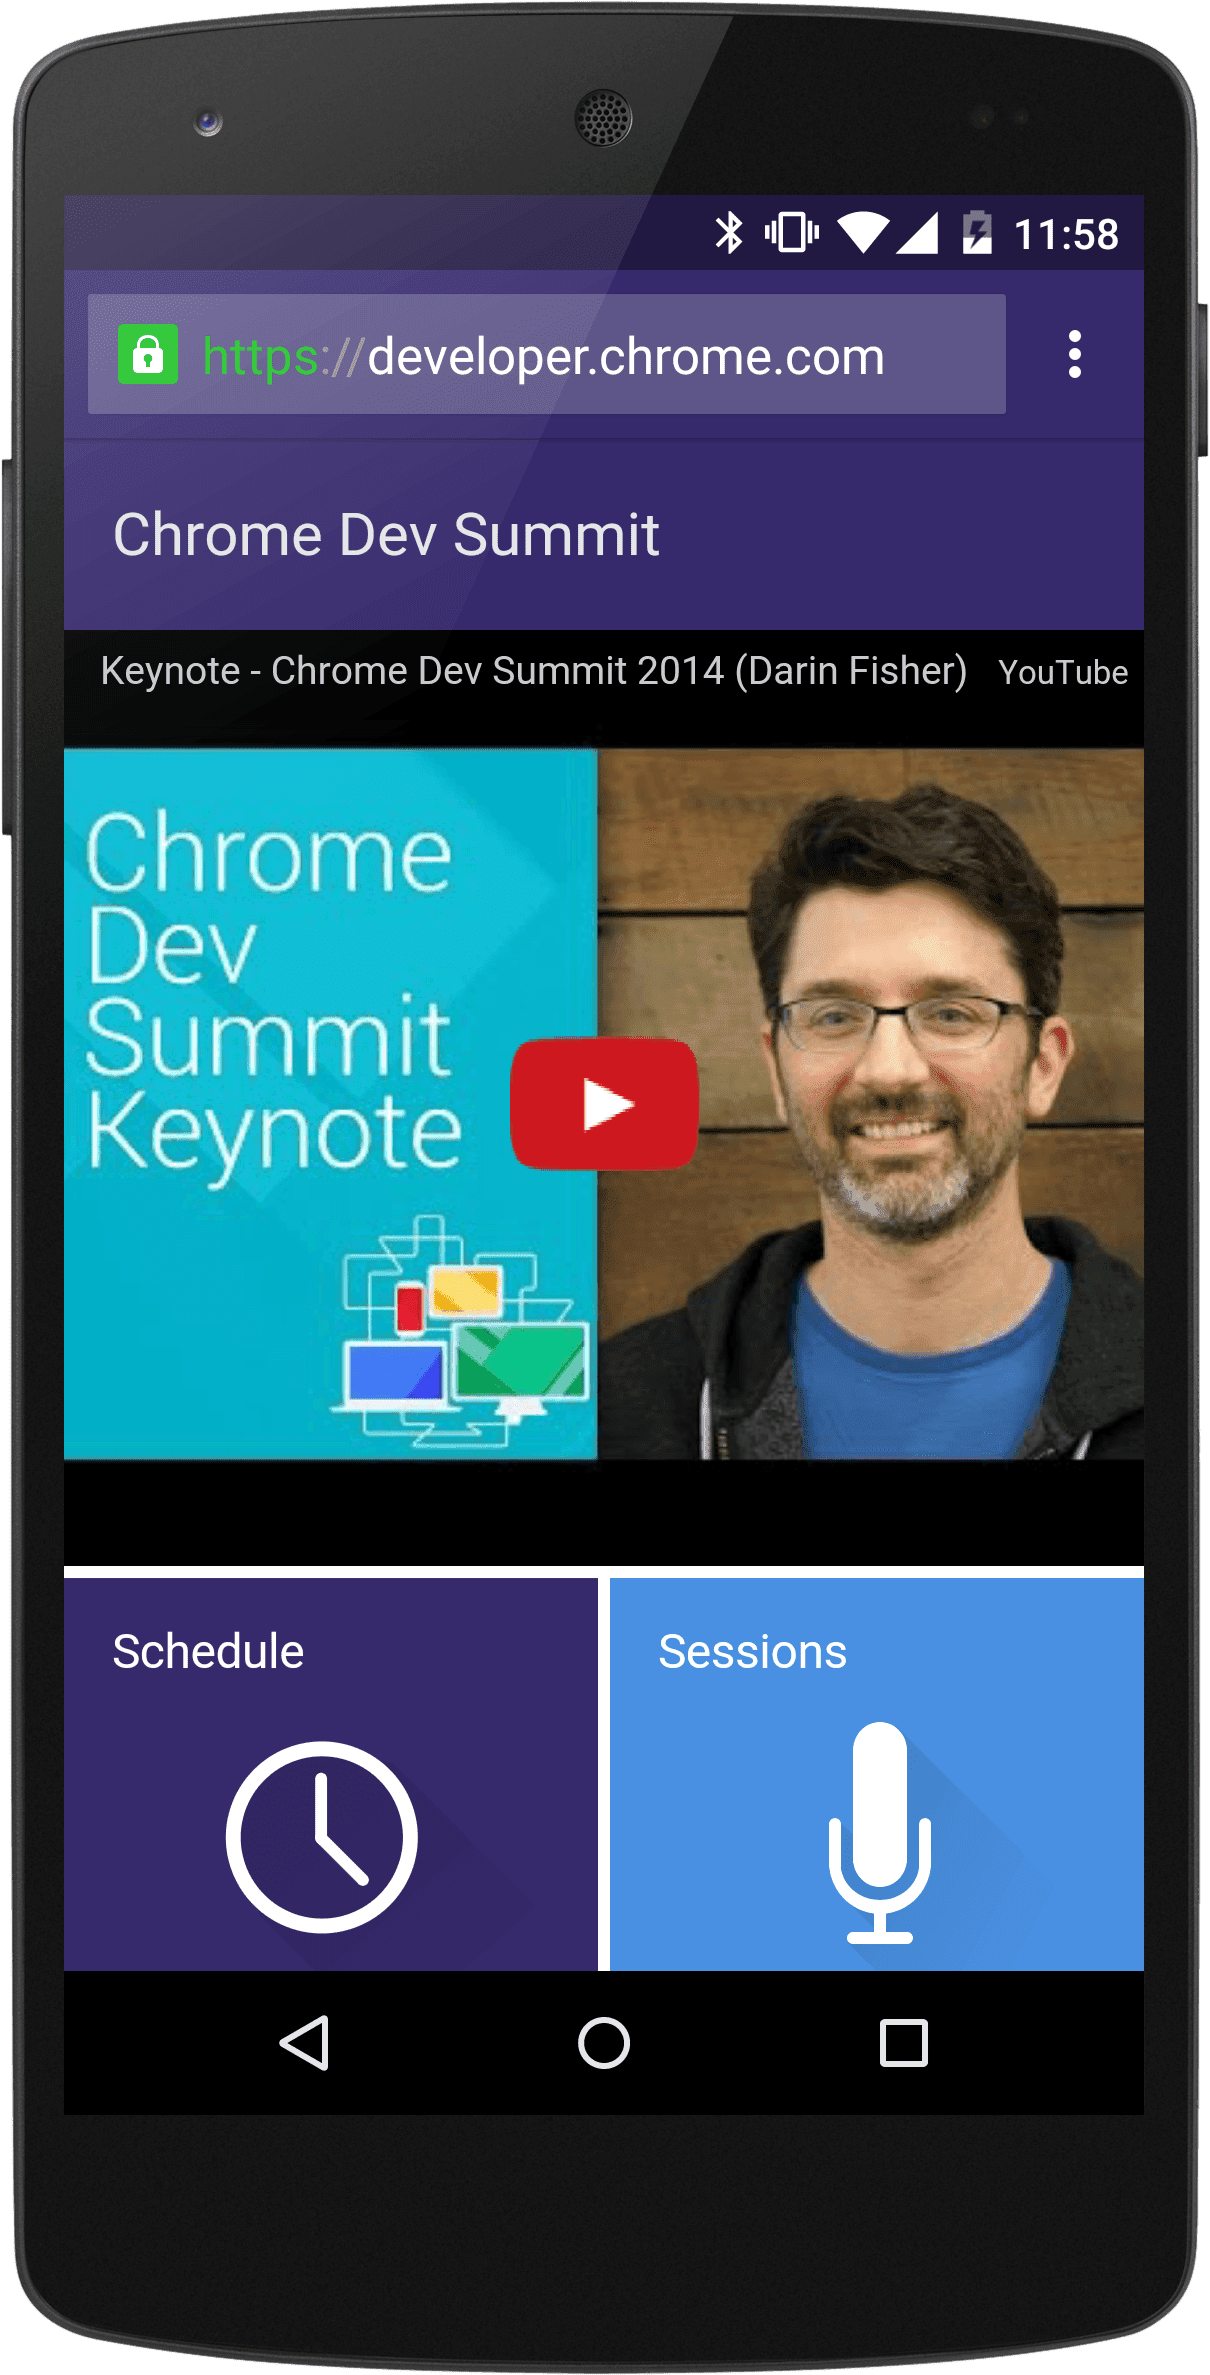 Chrome Dev Summit 2014 website screenshot